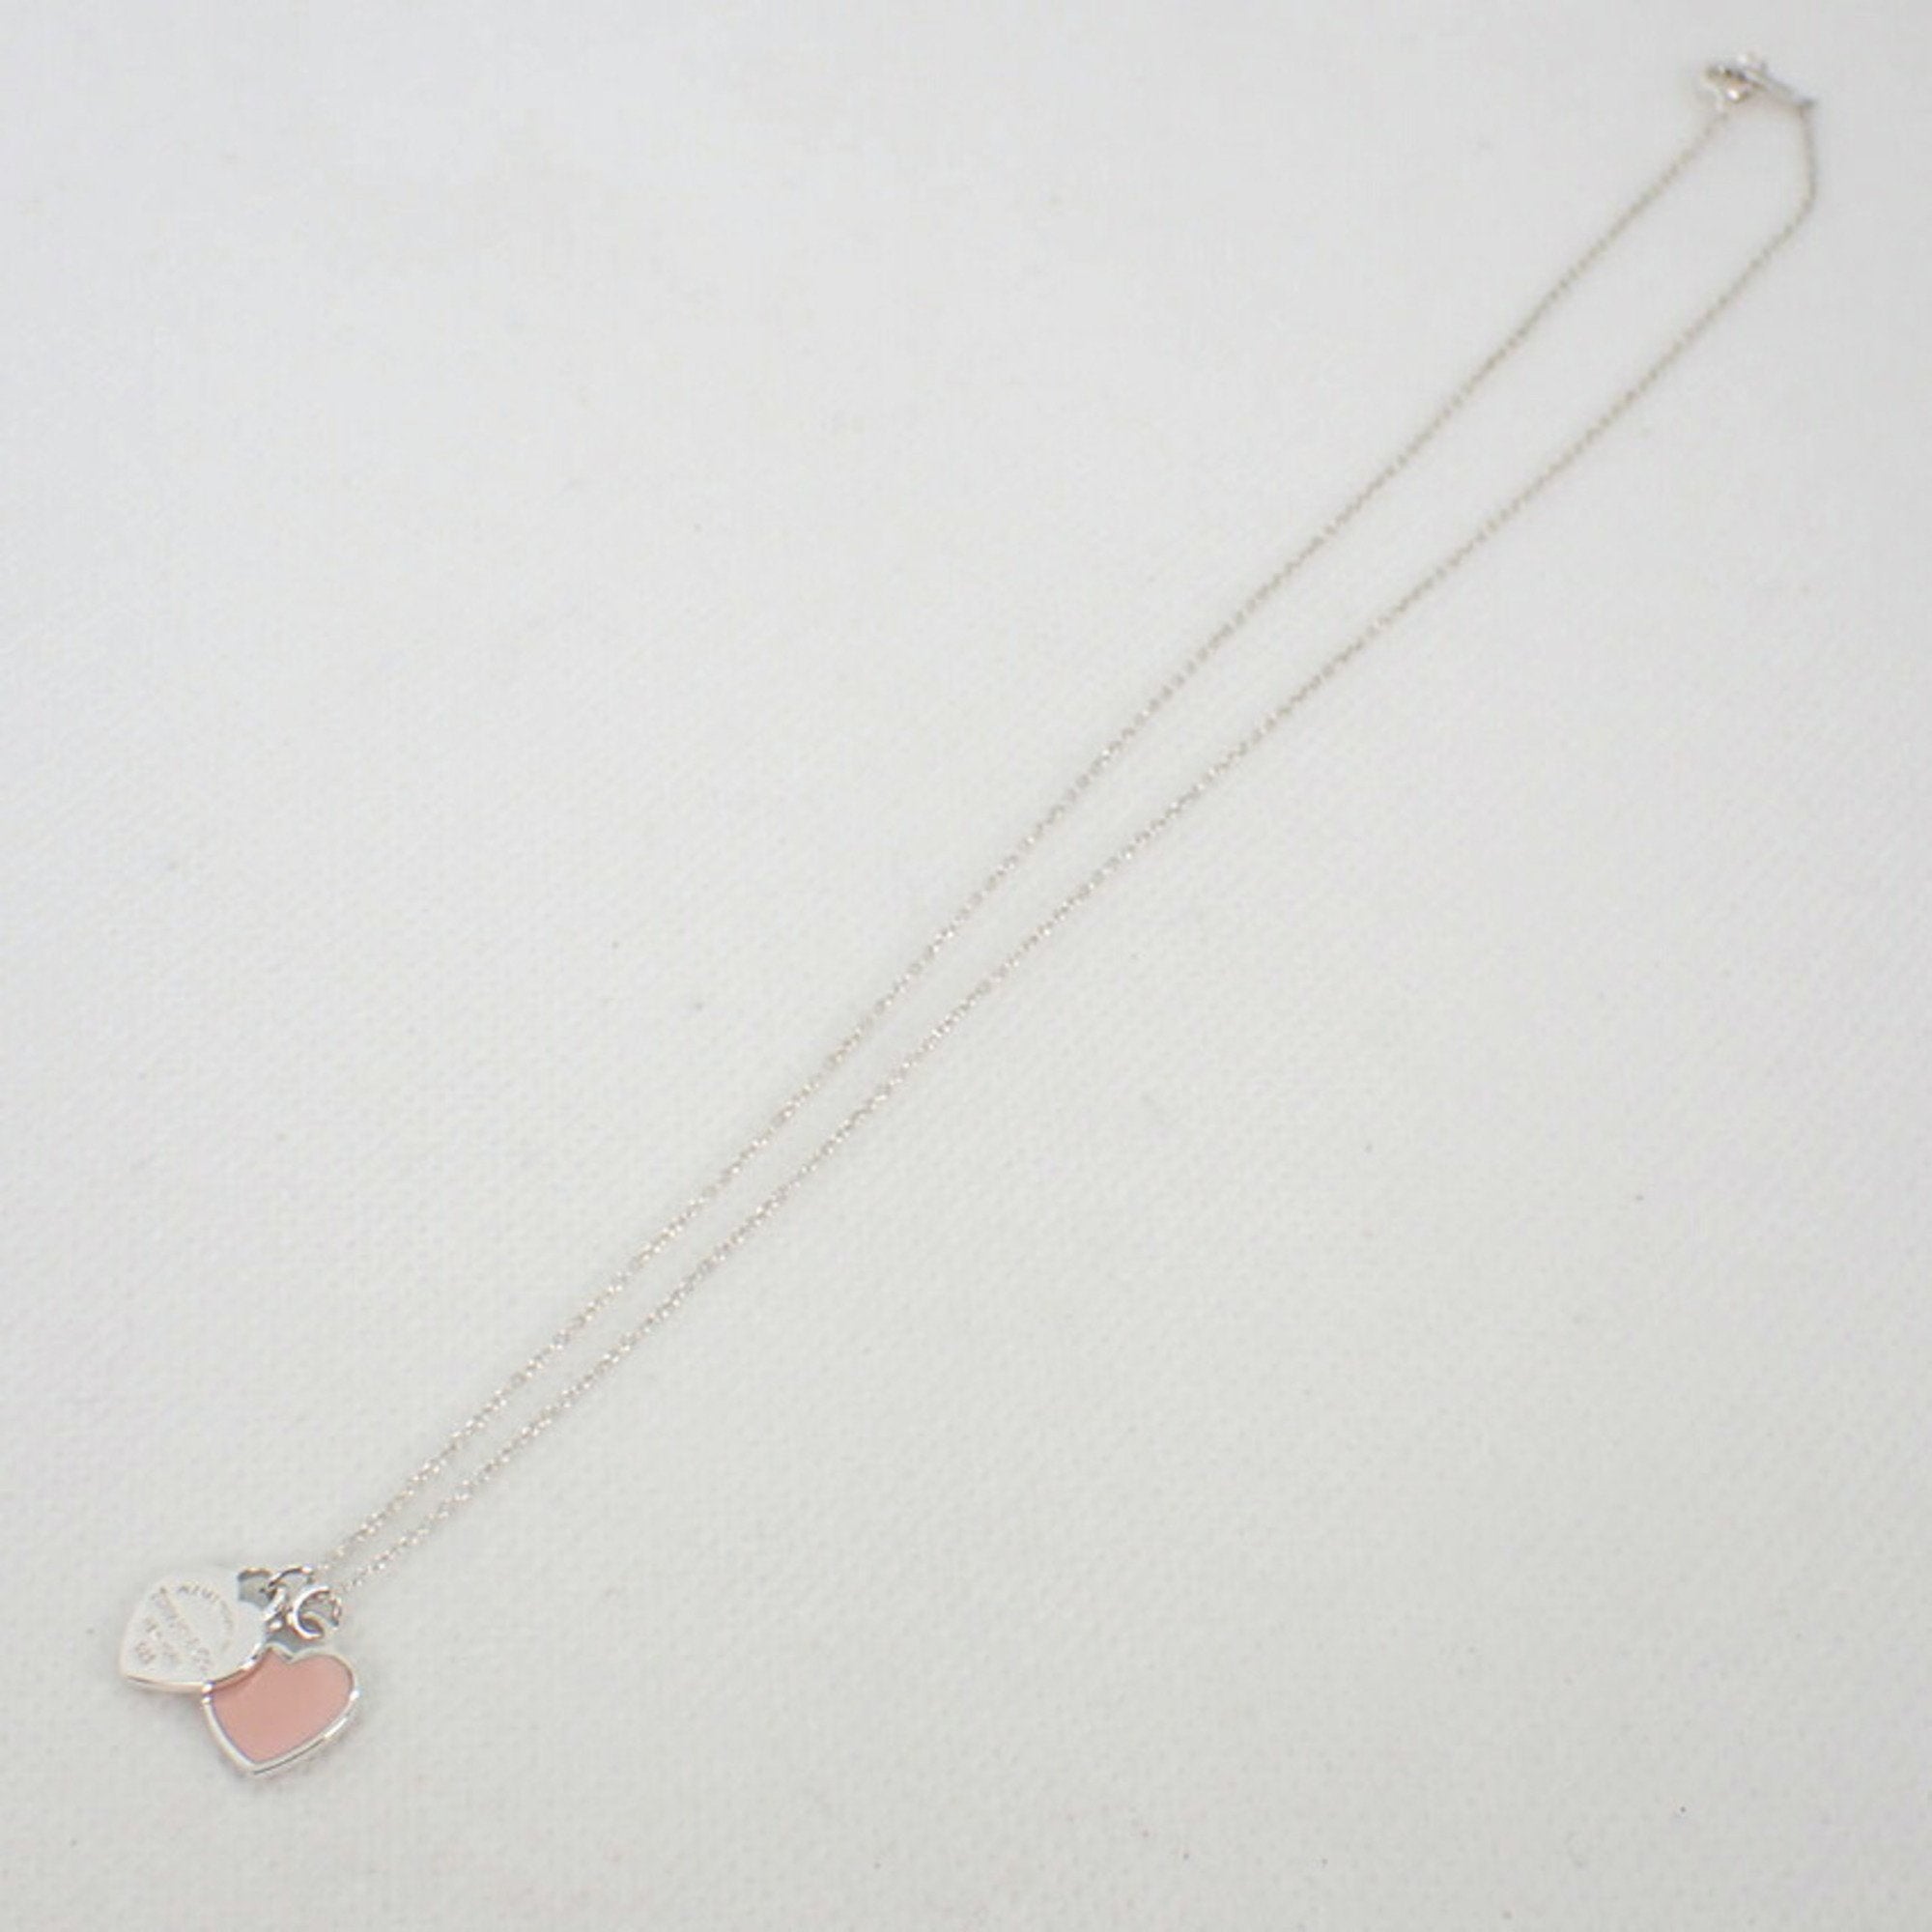 Tiffany Sentimental Double Heart Necklace 18 Karat Pink Gold & Sterling  Silver | eBay